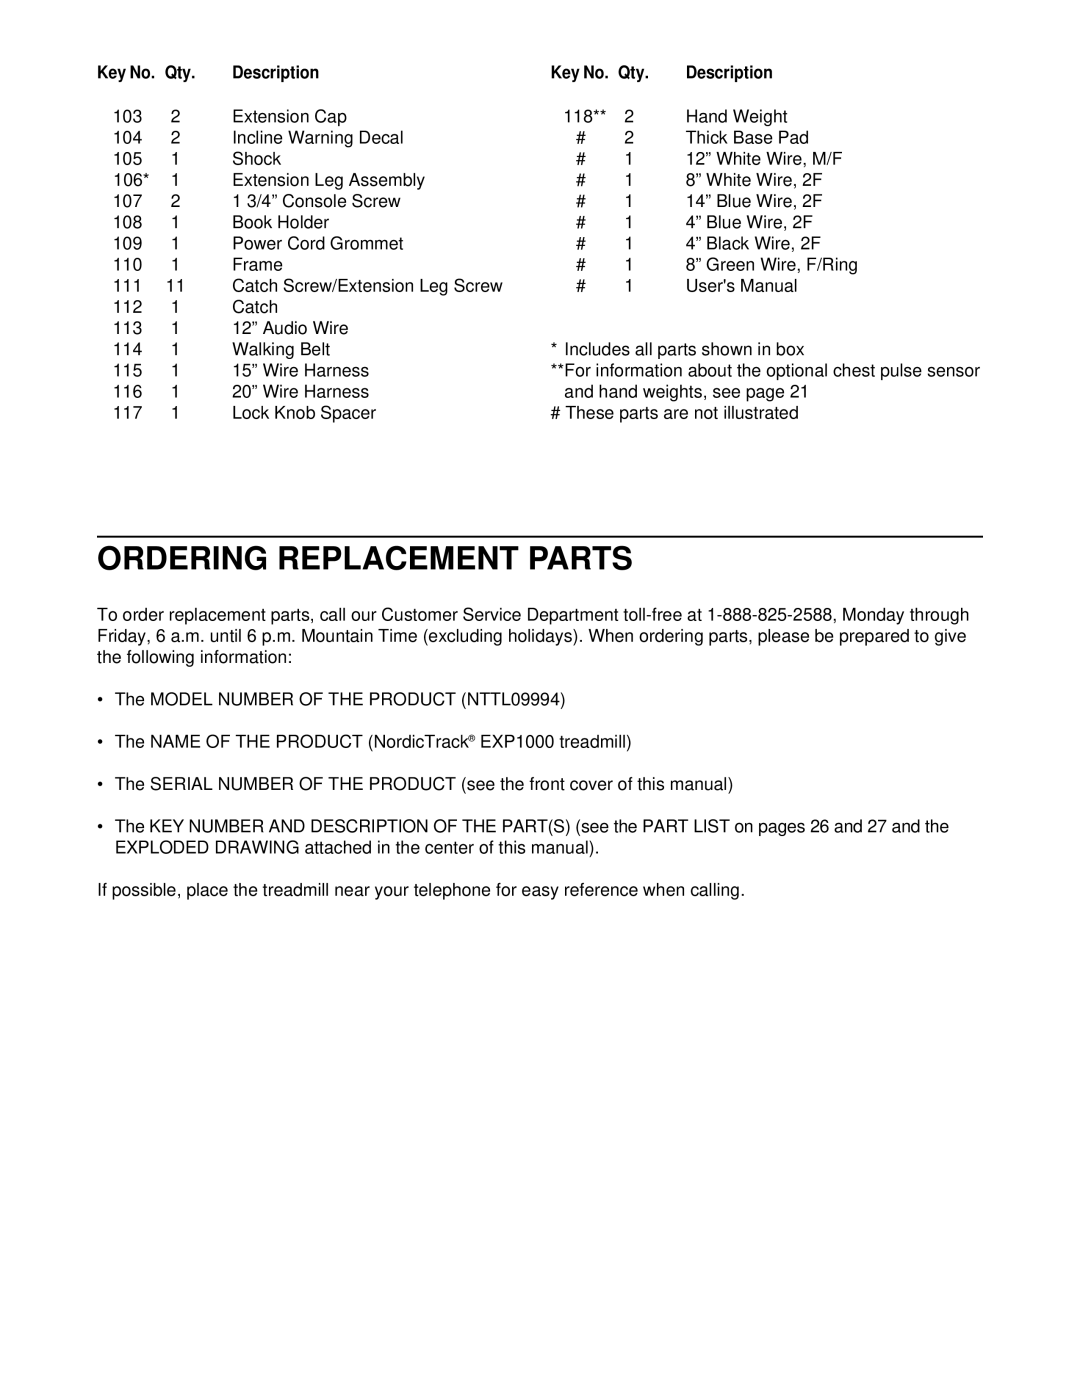 NordicTrack NTTL09994 user manual Ordering Replacement Parts, Description 